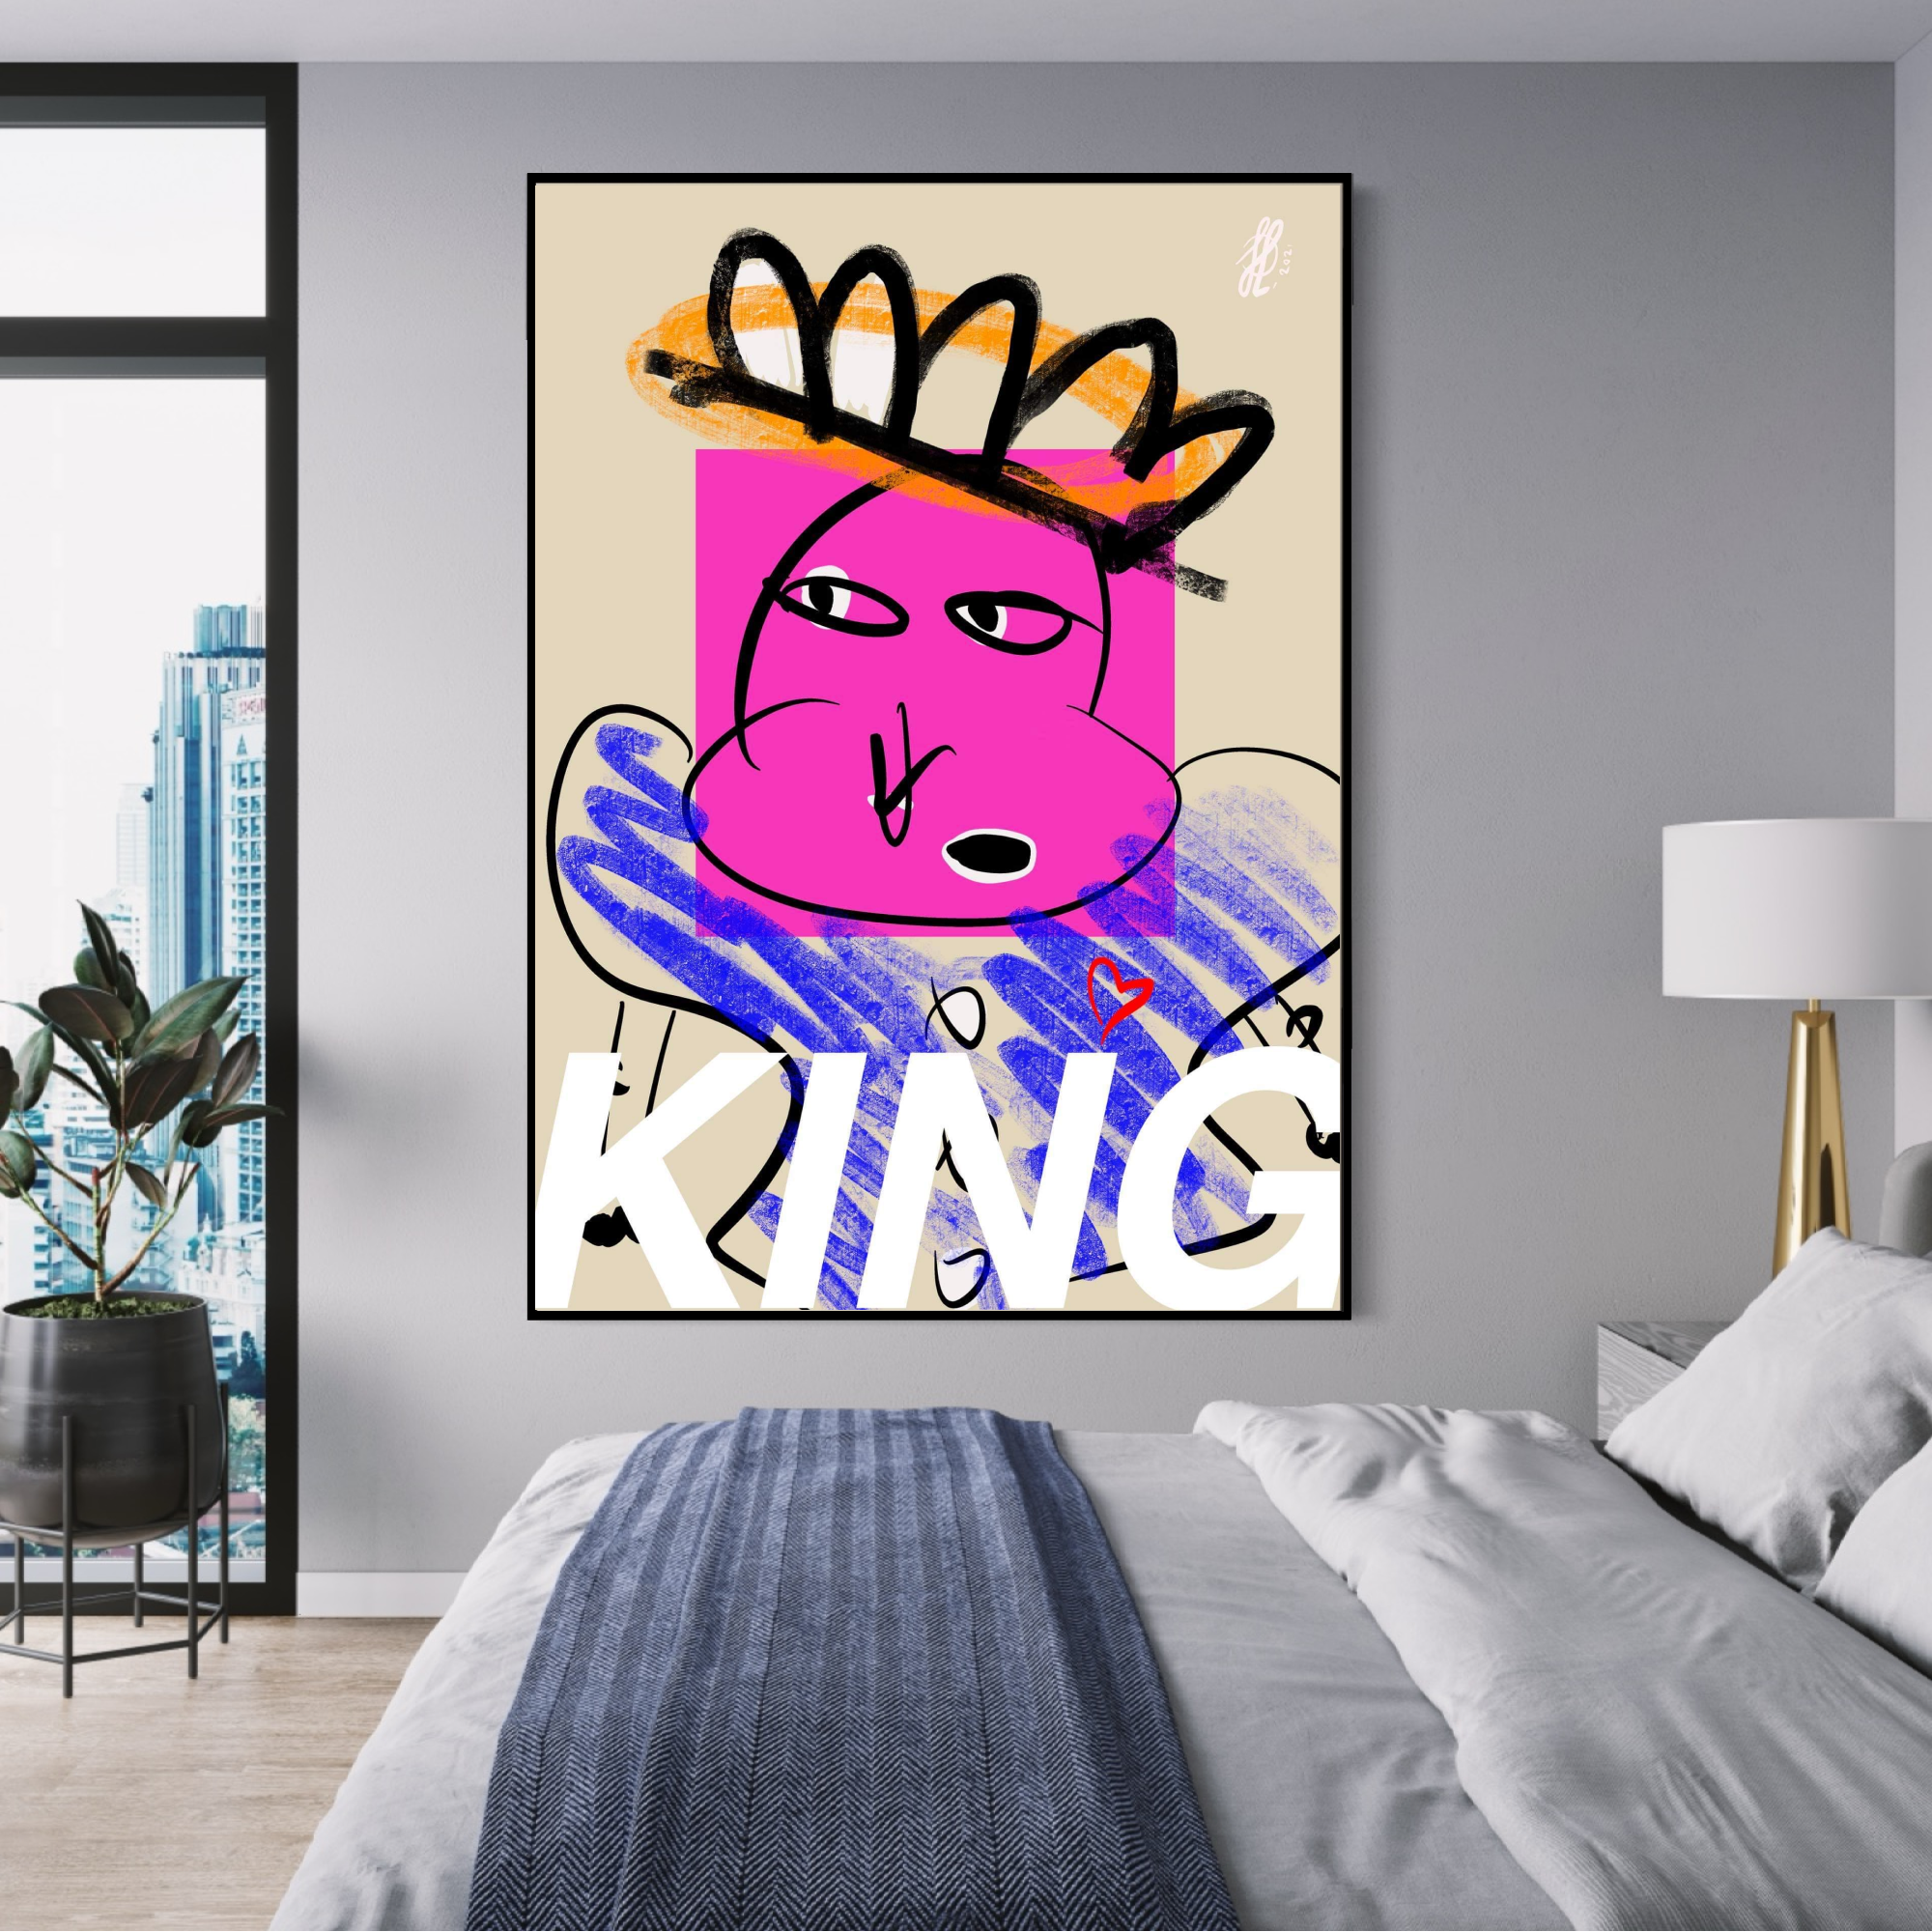 Plakat: "King"